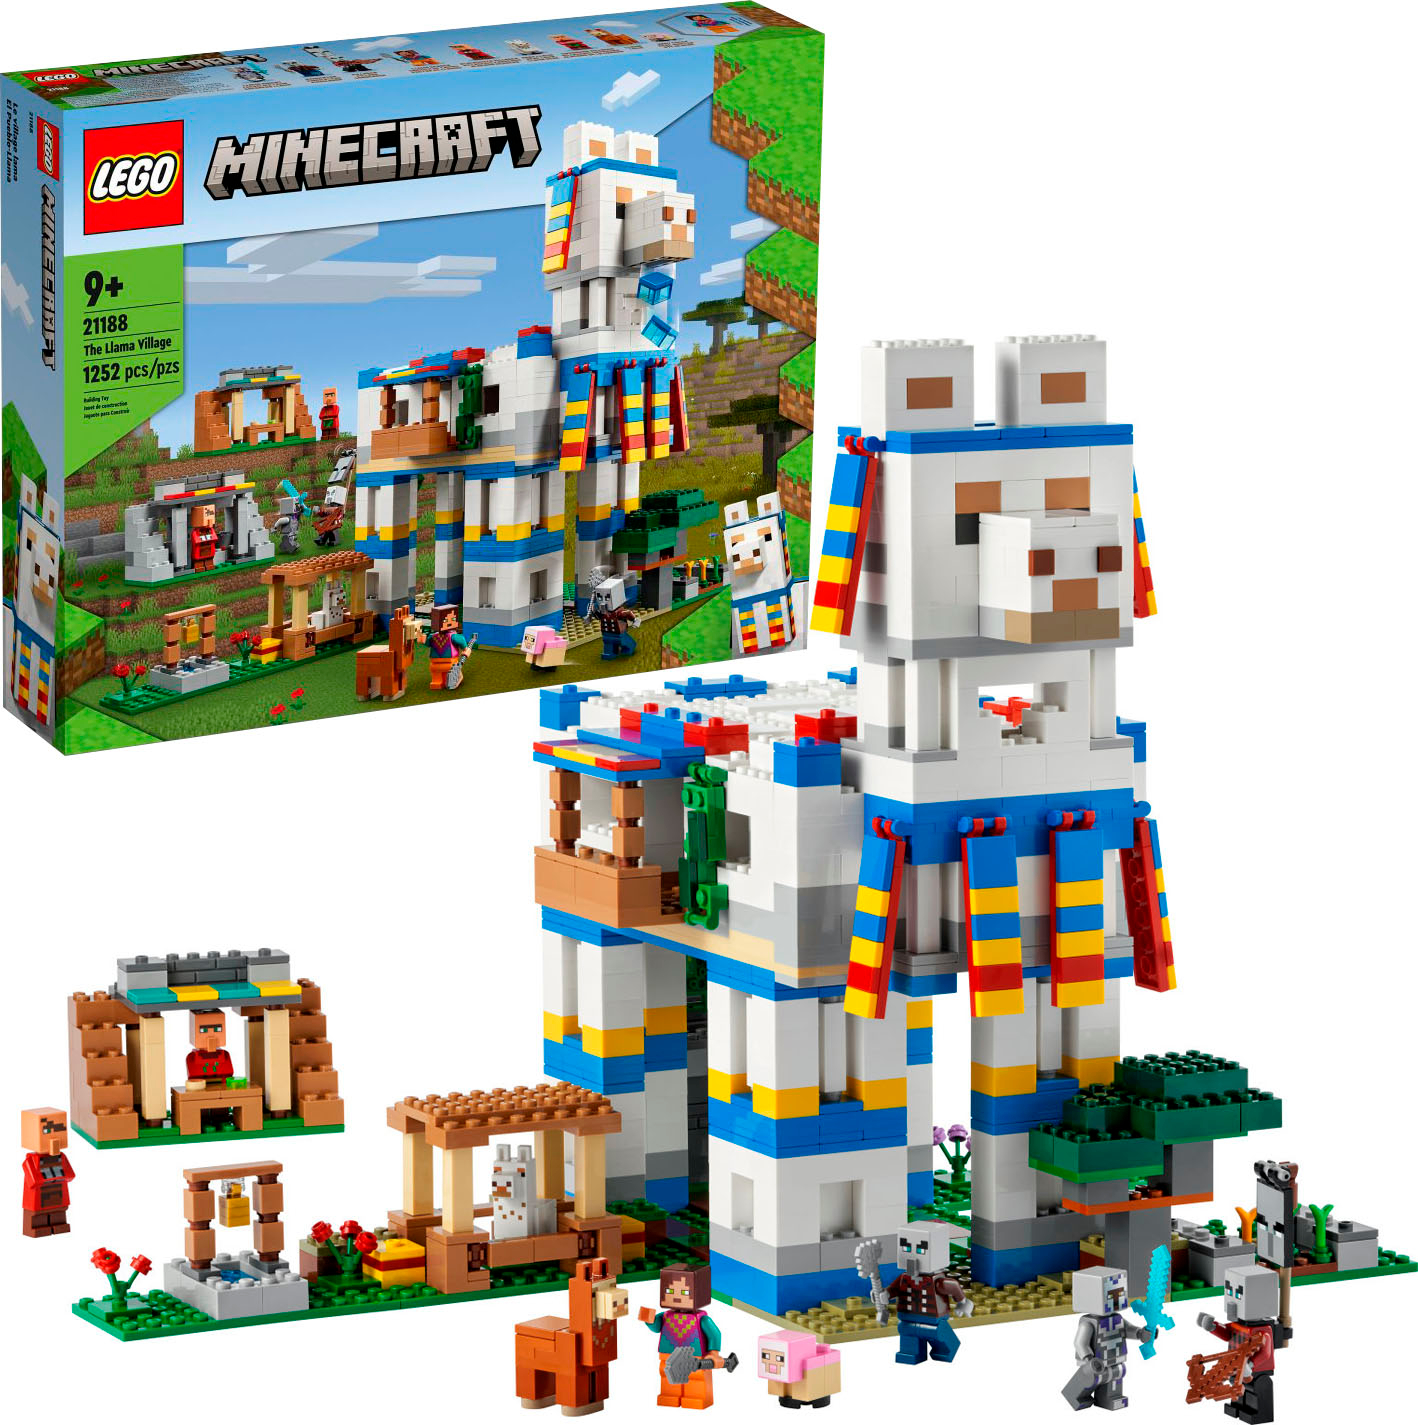 Overskæg dissipation tabe LEGO Minecraft The Llama Village 21188 6379582 - Best Buy